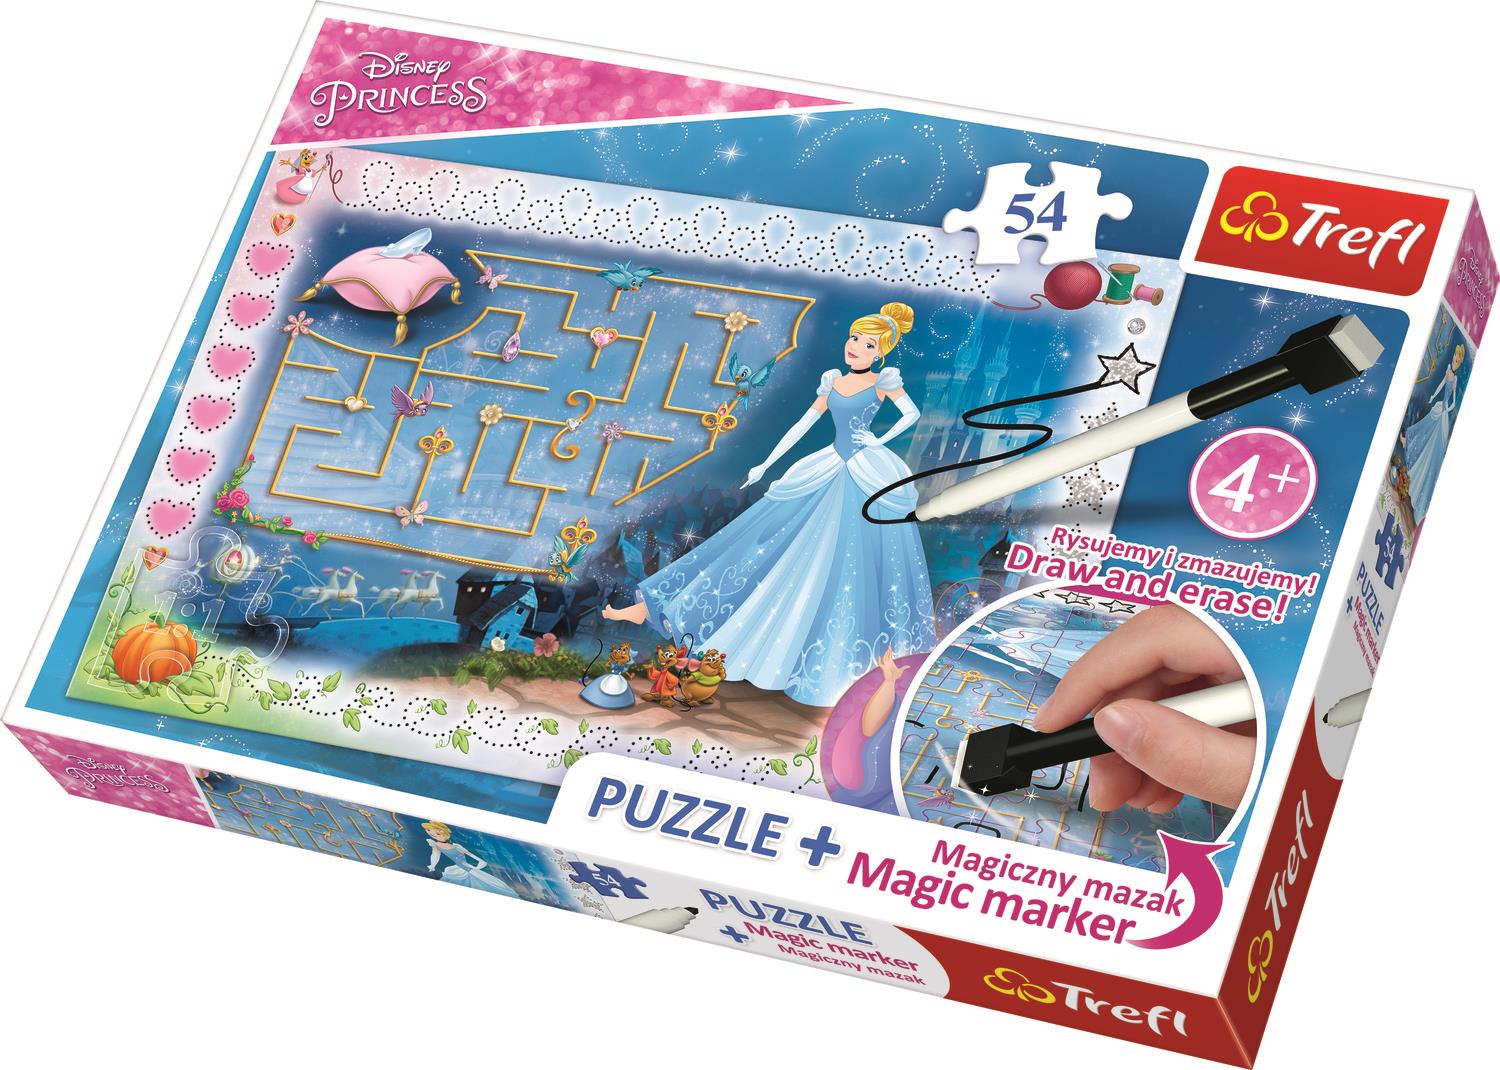 Trefl Çocuk Puzzle 75112 Princess, Disney 54 Parça + Marker Puzzle